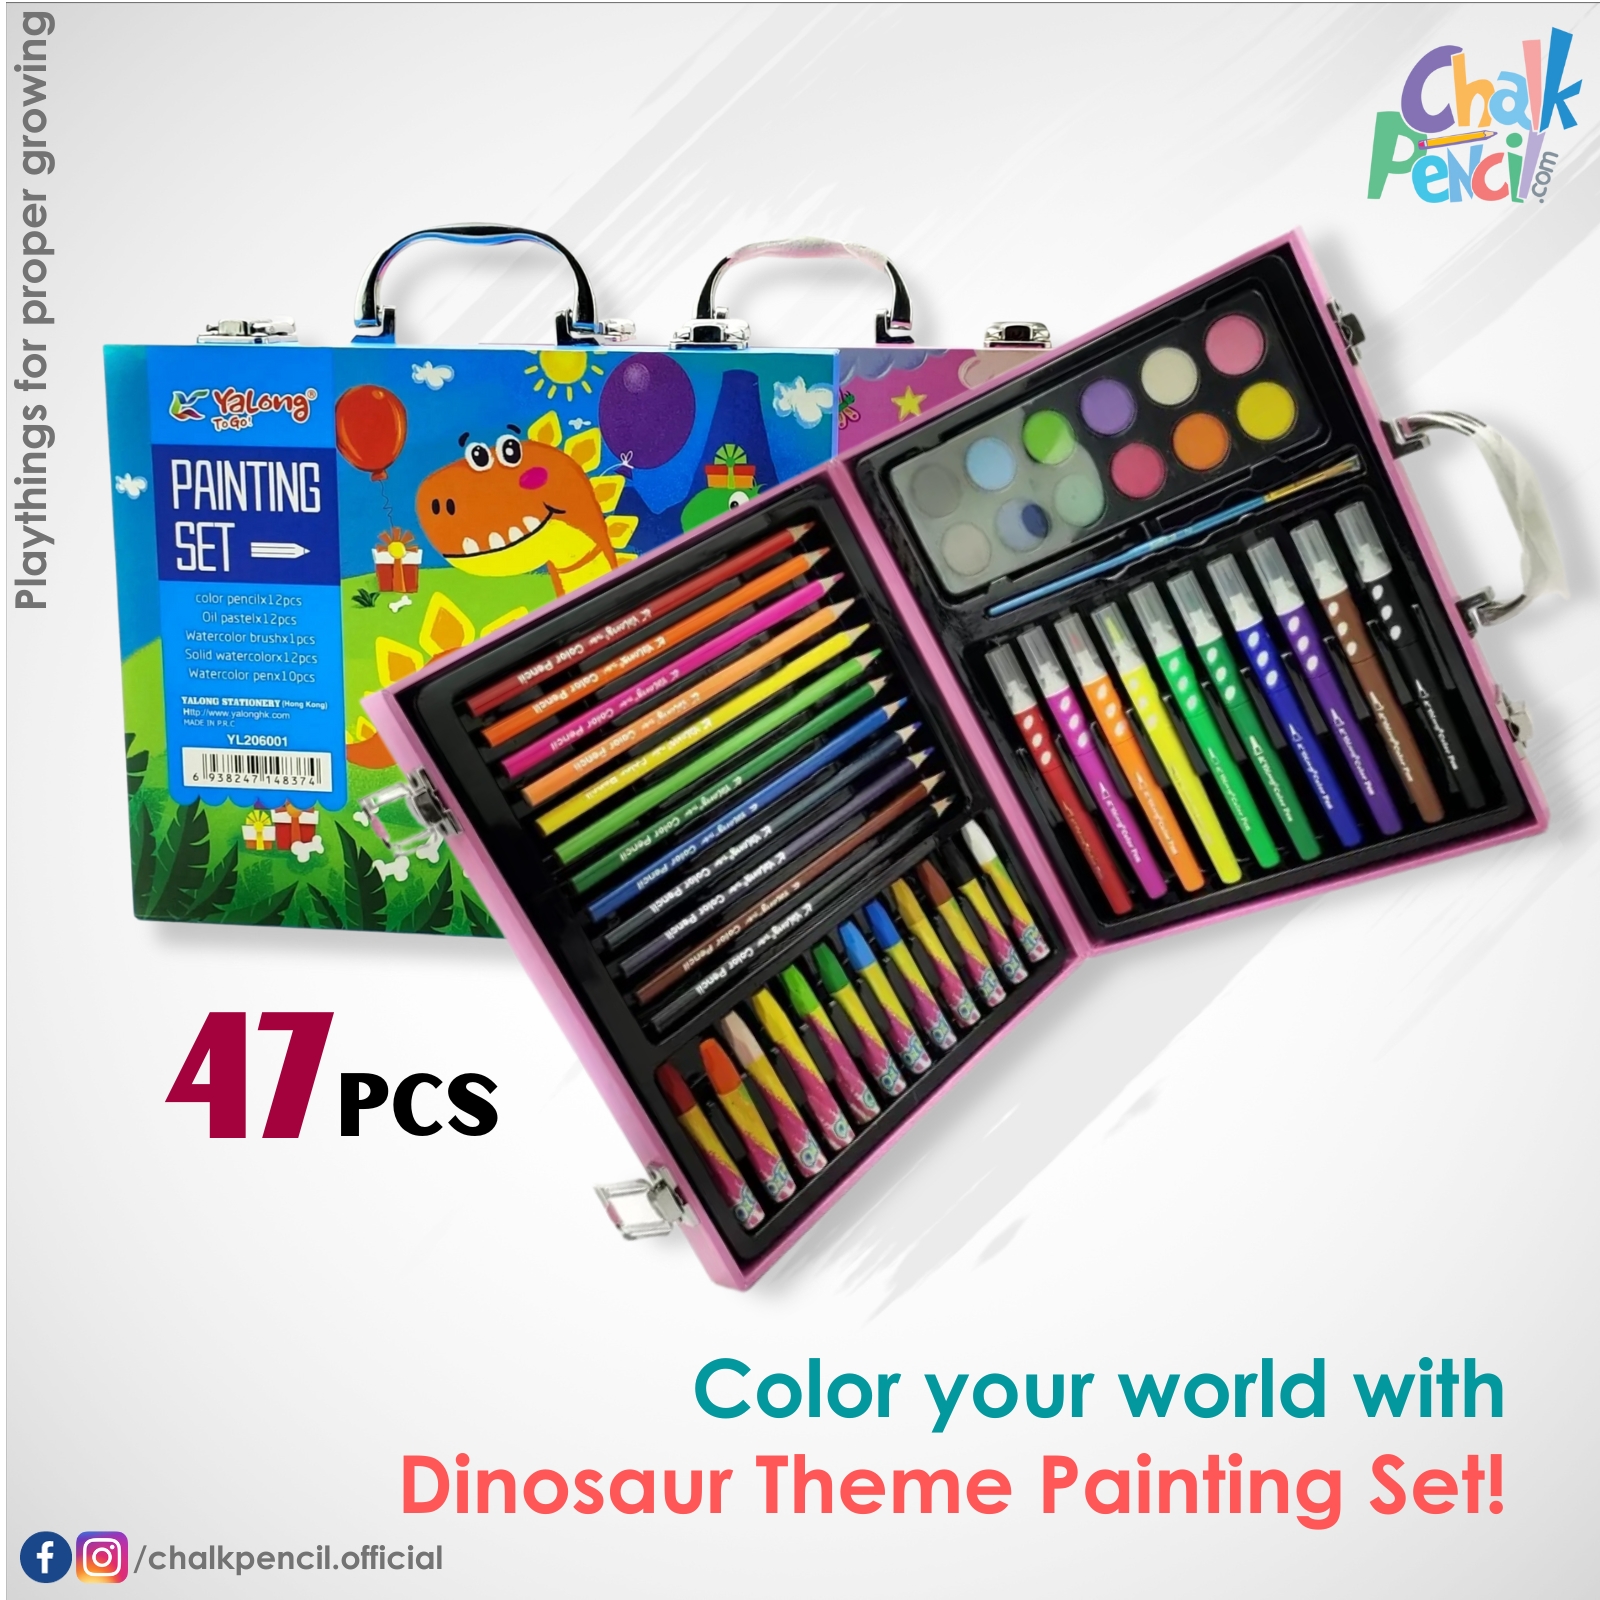 Dinosaur Theme Painting Set 47pcs